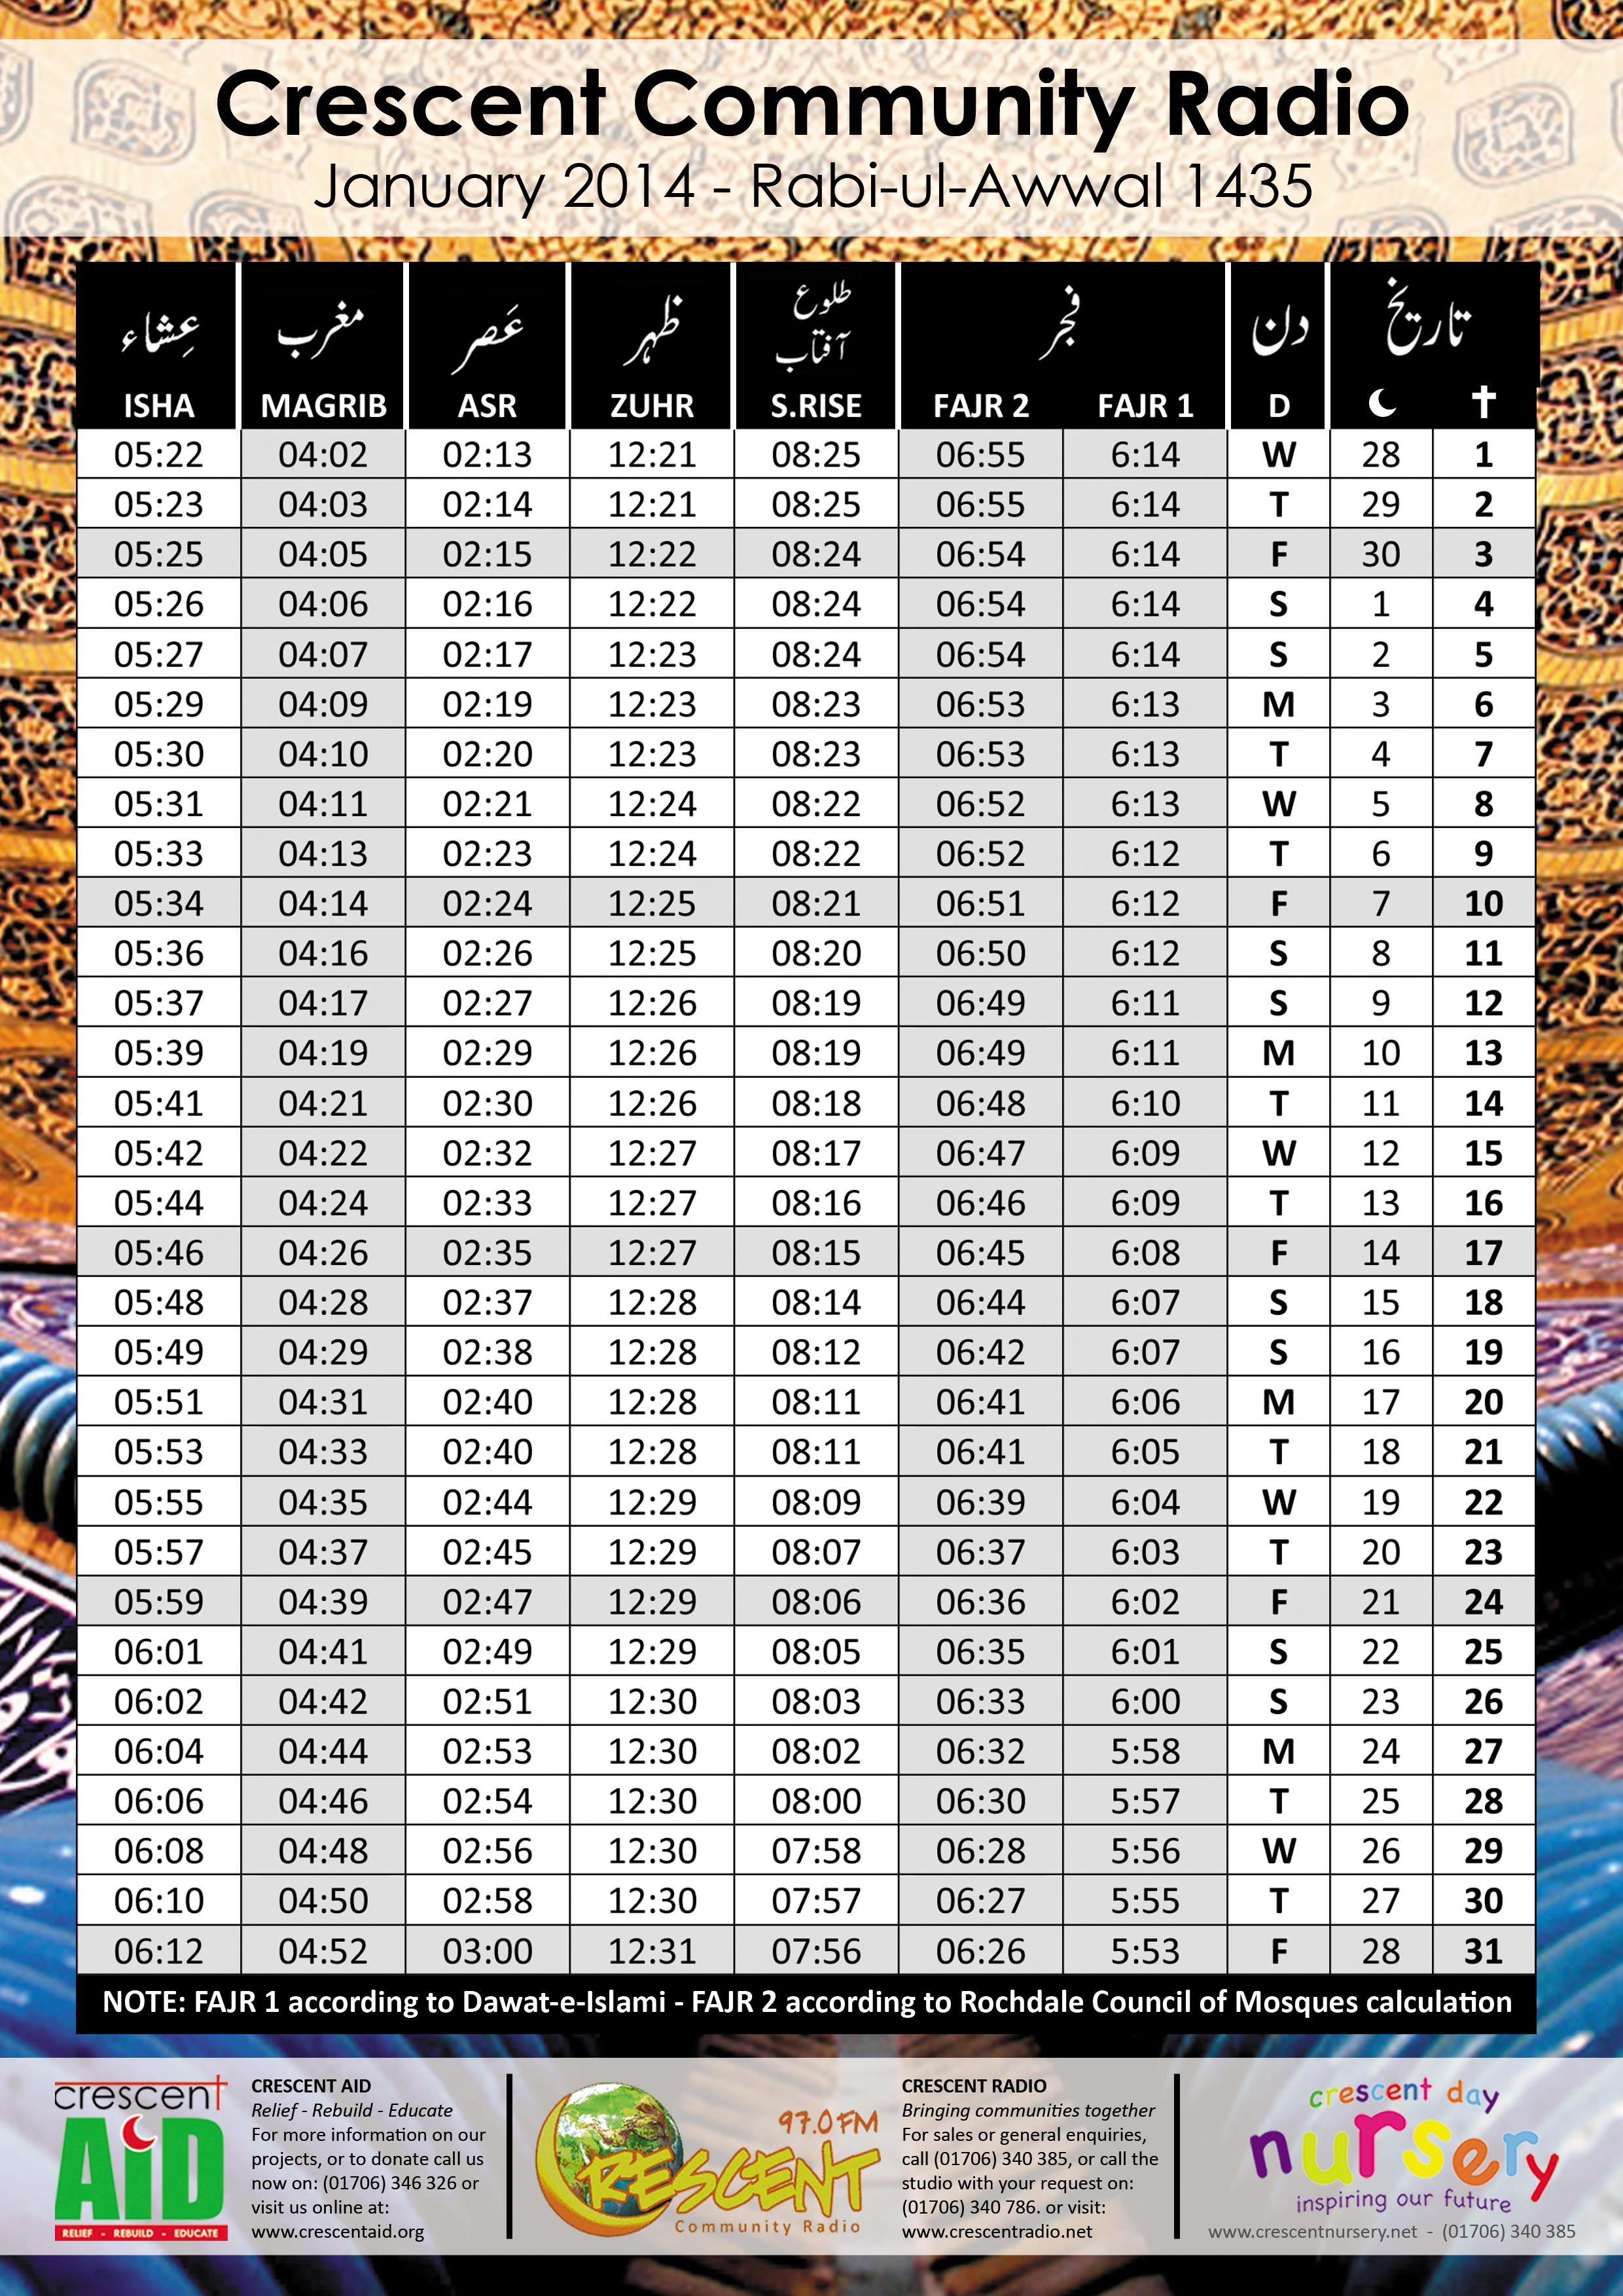 coventry masjid namaz timetable